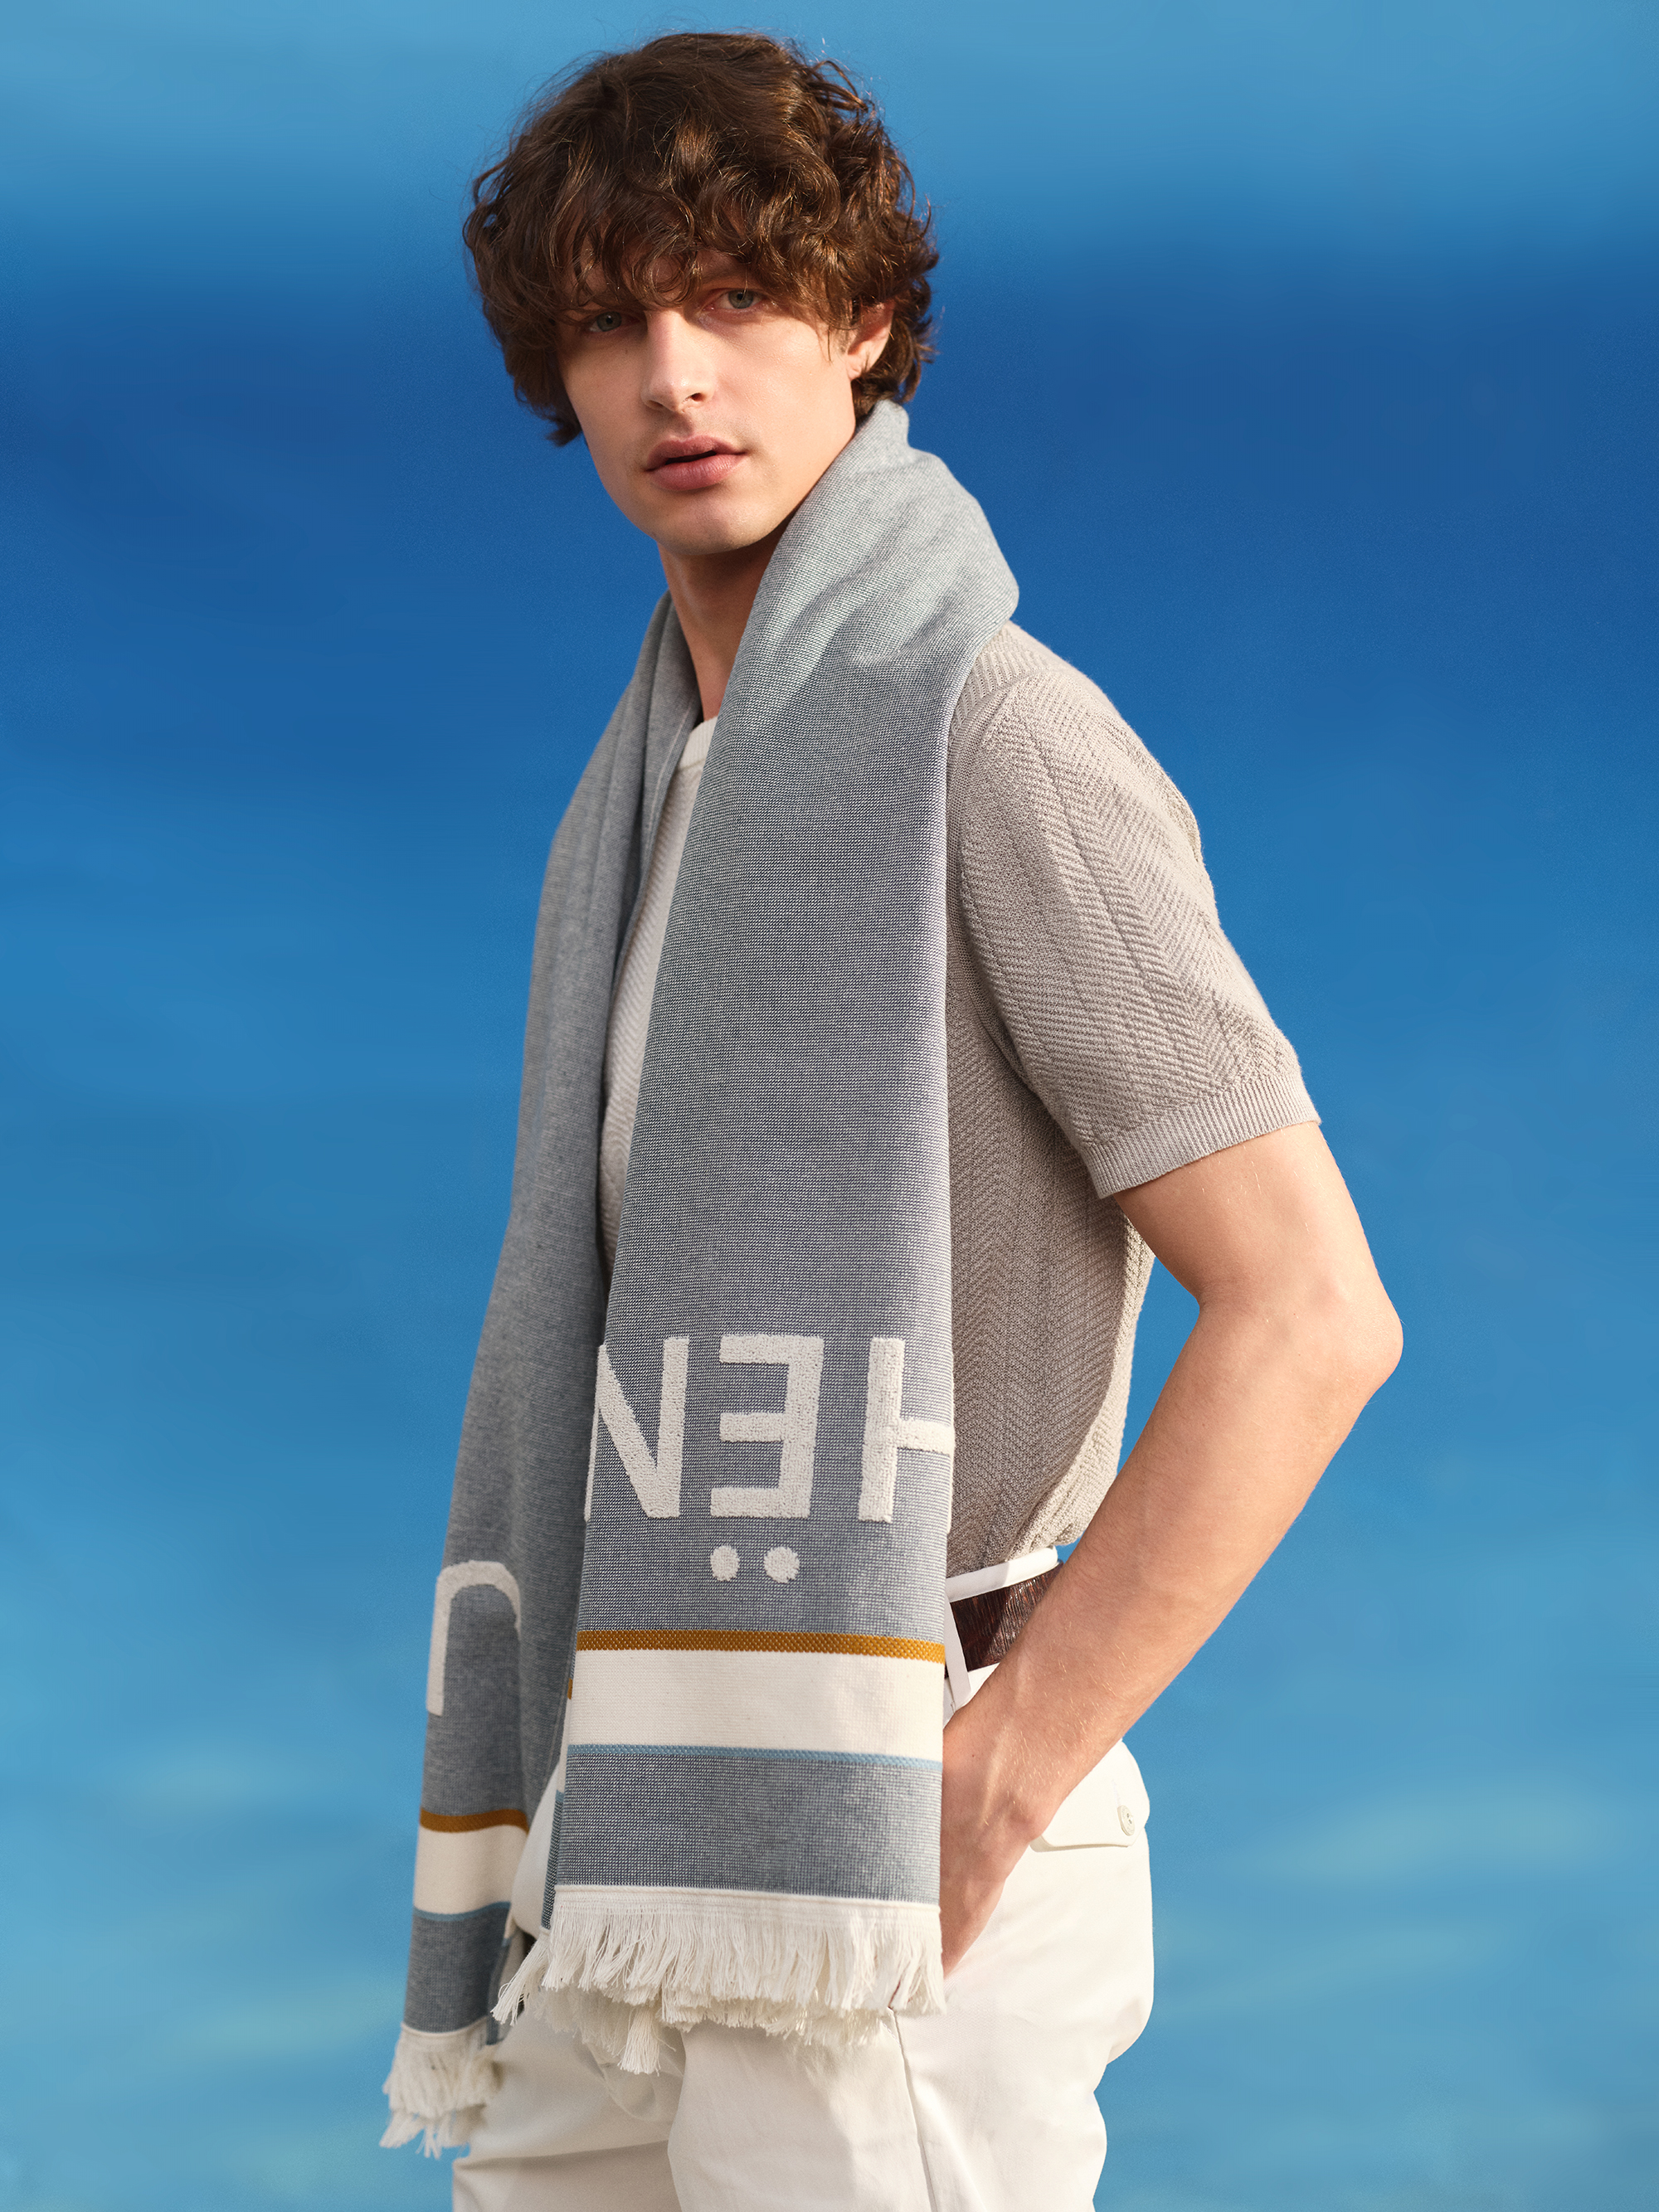 Model with Jacob Cohën beach towel around neck